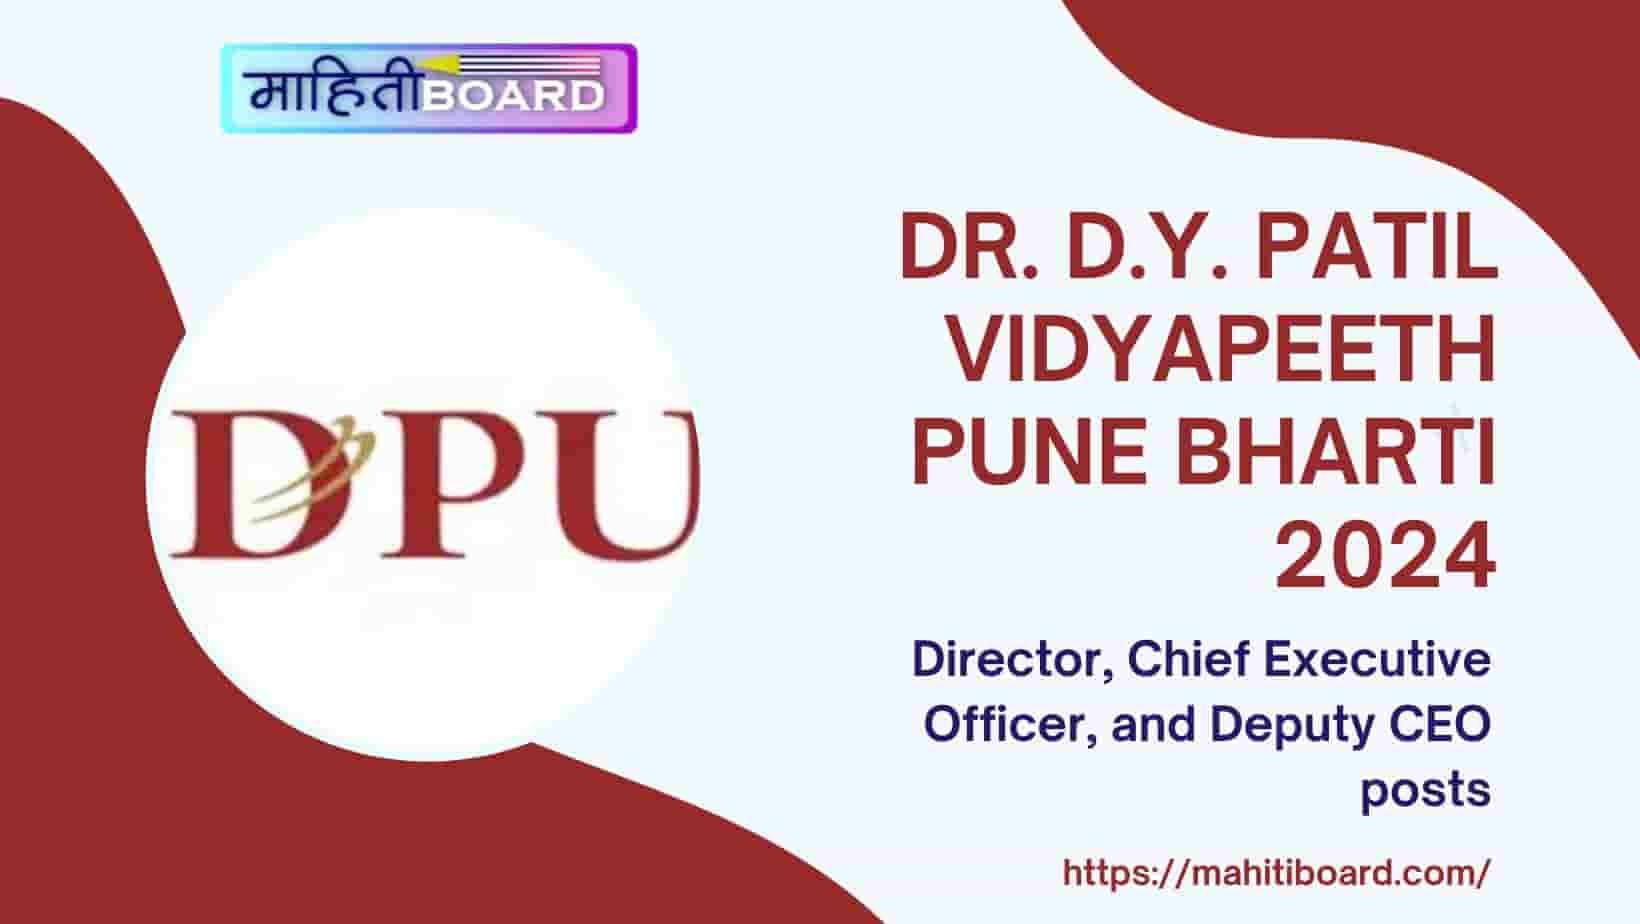 Dr. D.Y. Patil Vidyapeeth Pune Bharti 2024